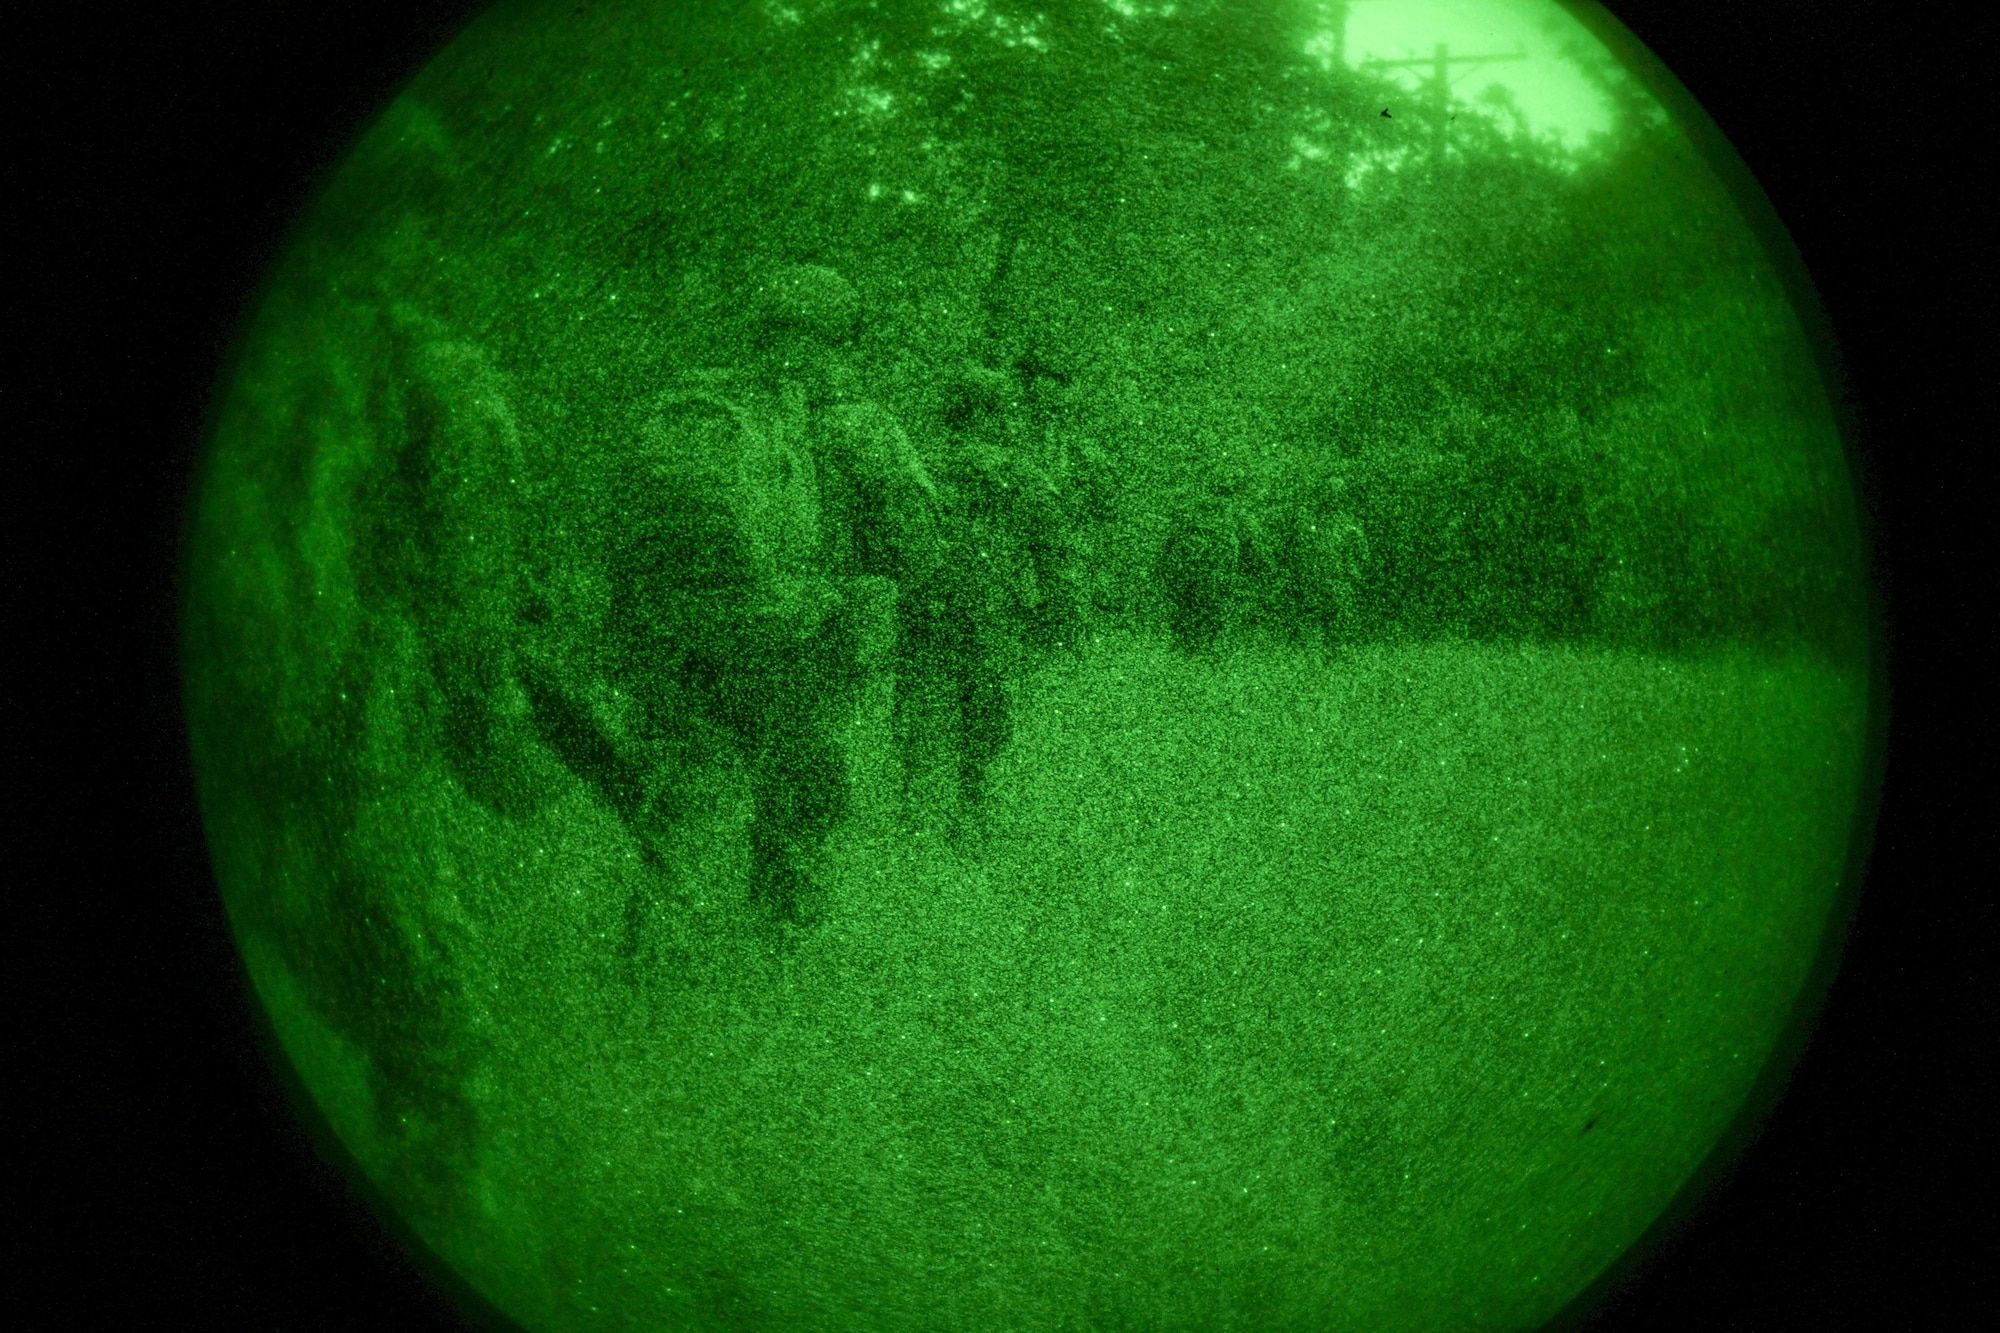 men and women in uniform patrol through the woods